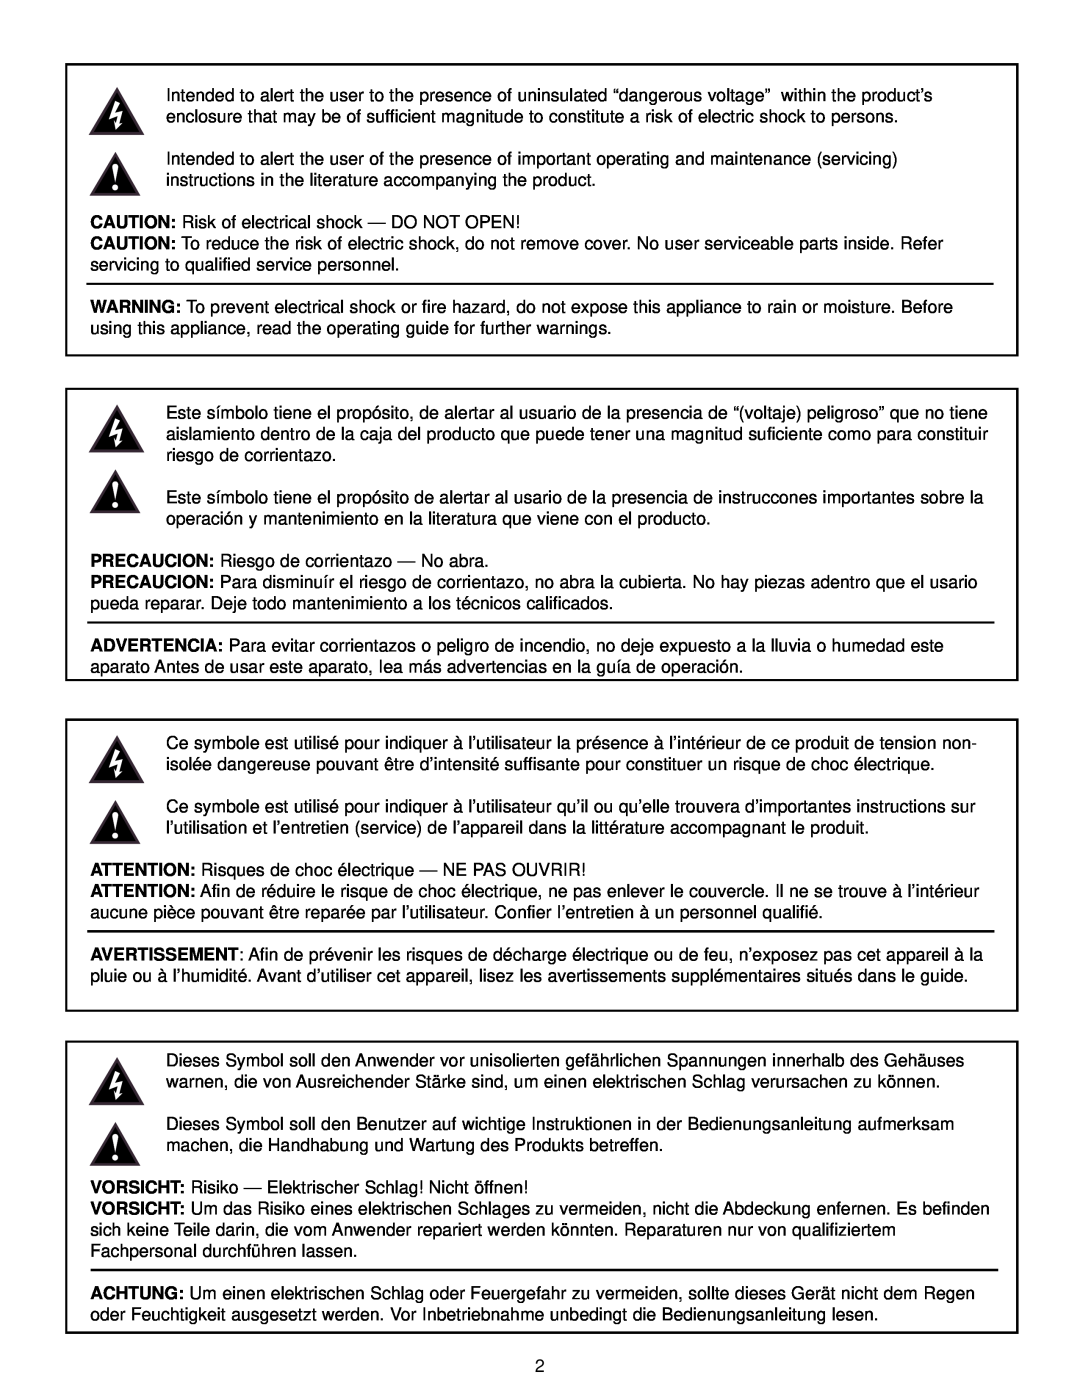 Peavey 100 manual CAUTION Risk of electrical shock - DO NOT OPEN, PRECAUCION Riesgo de corrientazo - No abra 